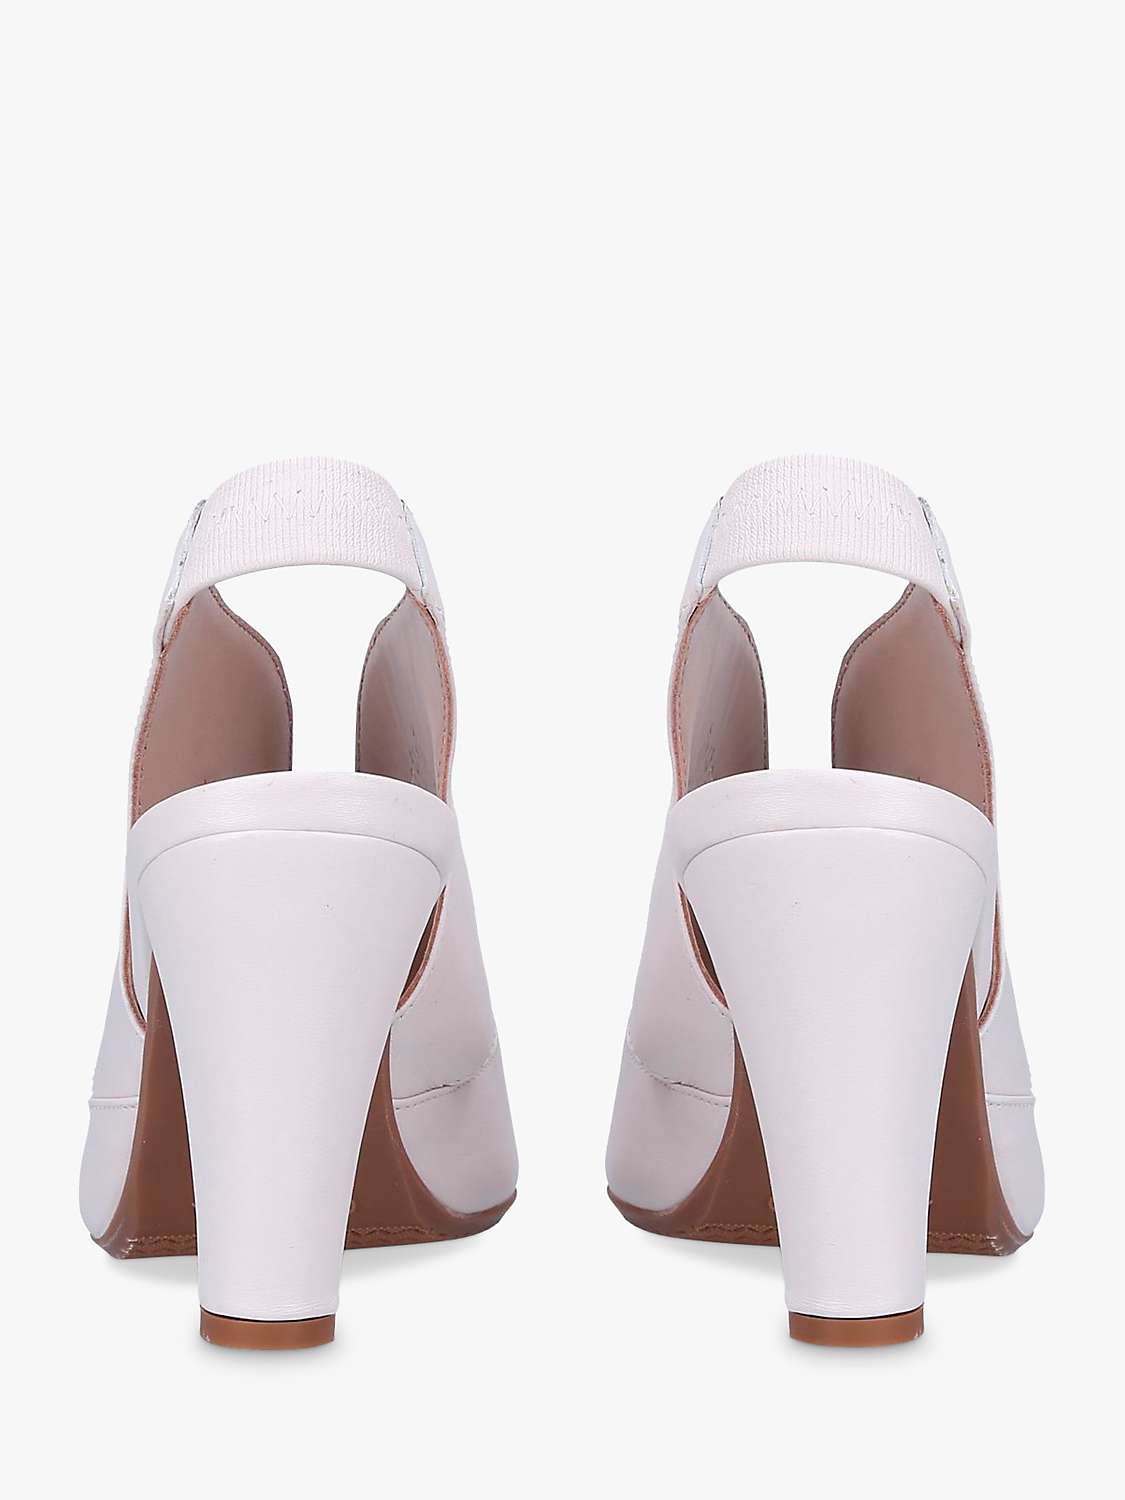 Buy Carvela Arabella Comfort Cone Heel Open Toe Leather Court Shoes Online at johnlewis.com